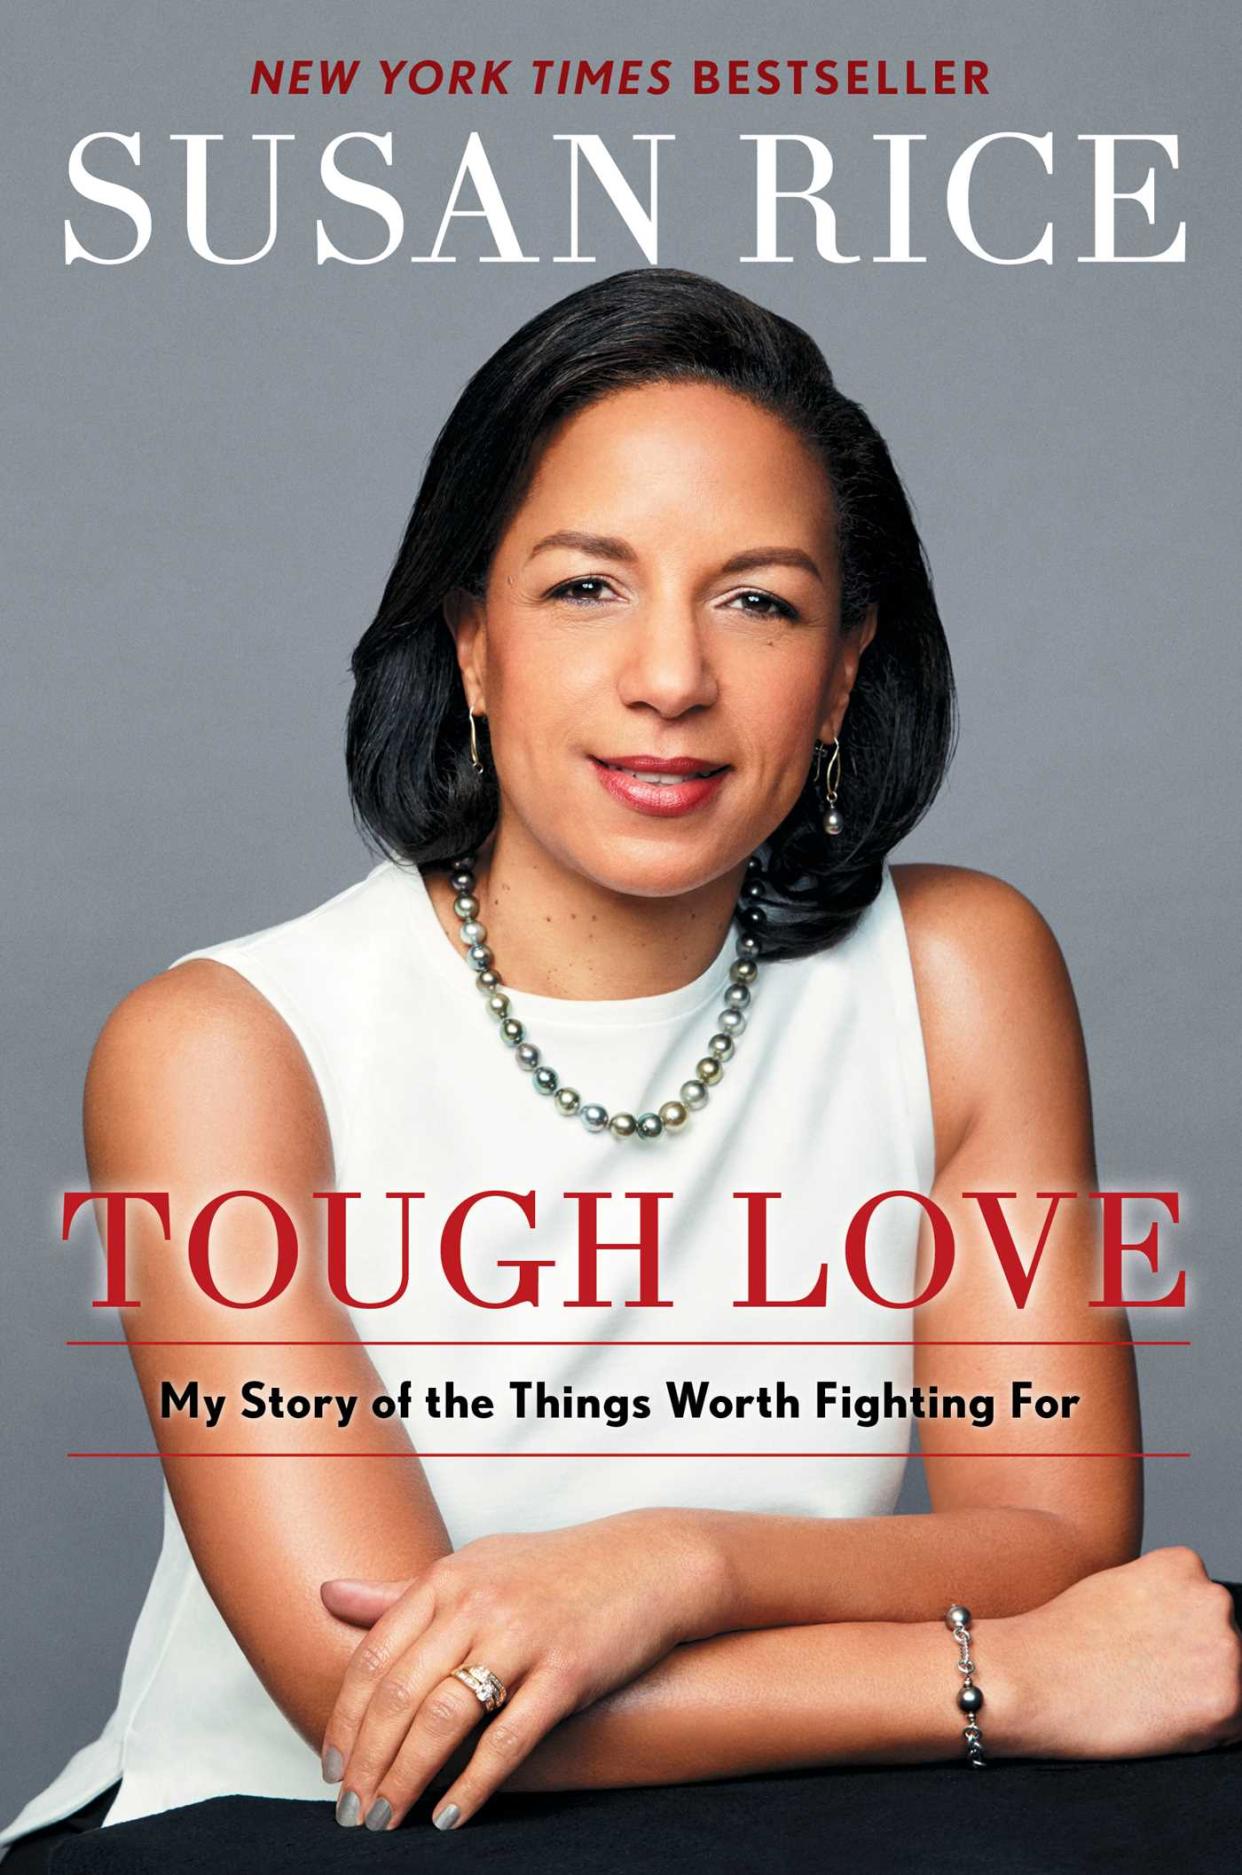 "Tough Love" by Susan Rice